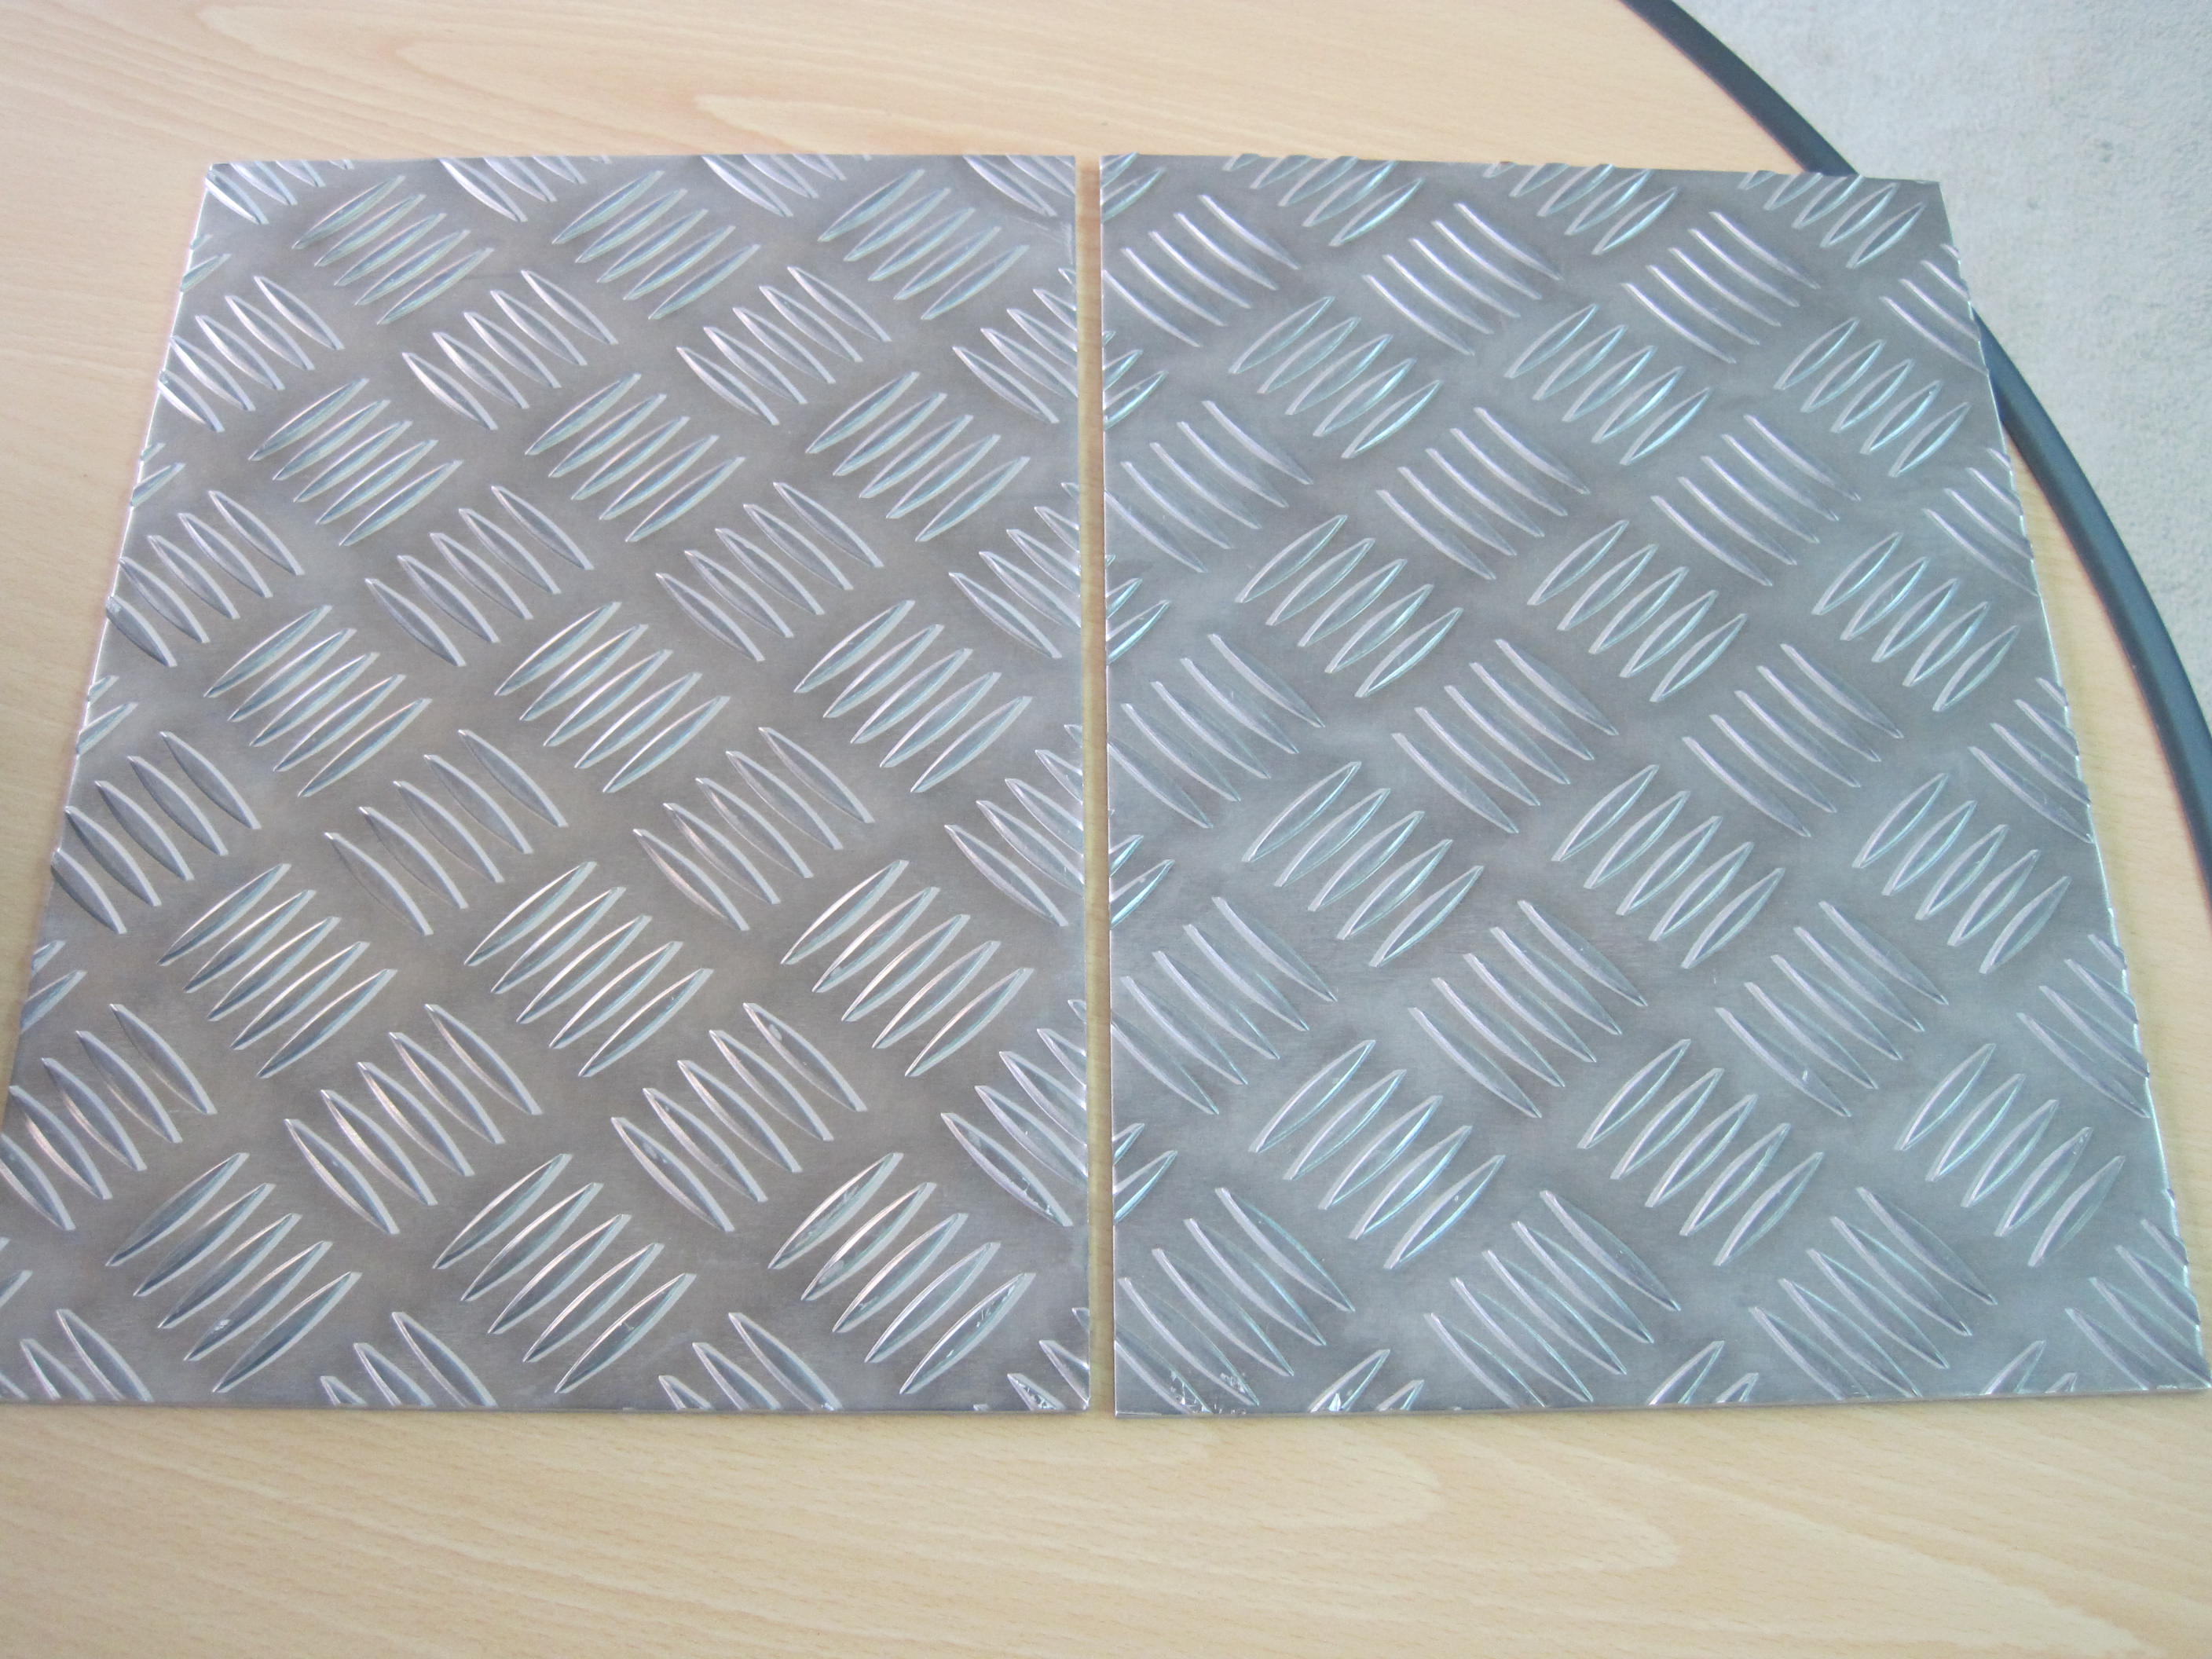 Aluminum diamond plate for anti-skid stairs and flooring